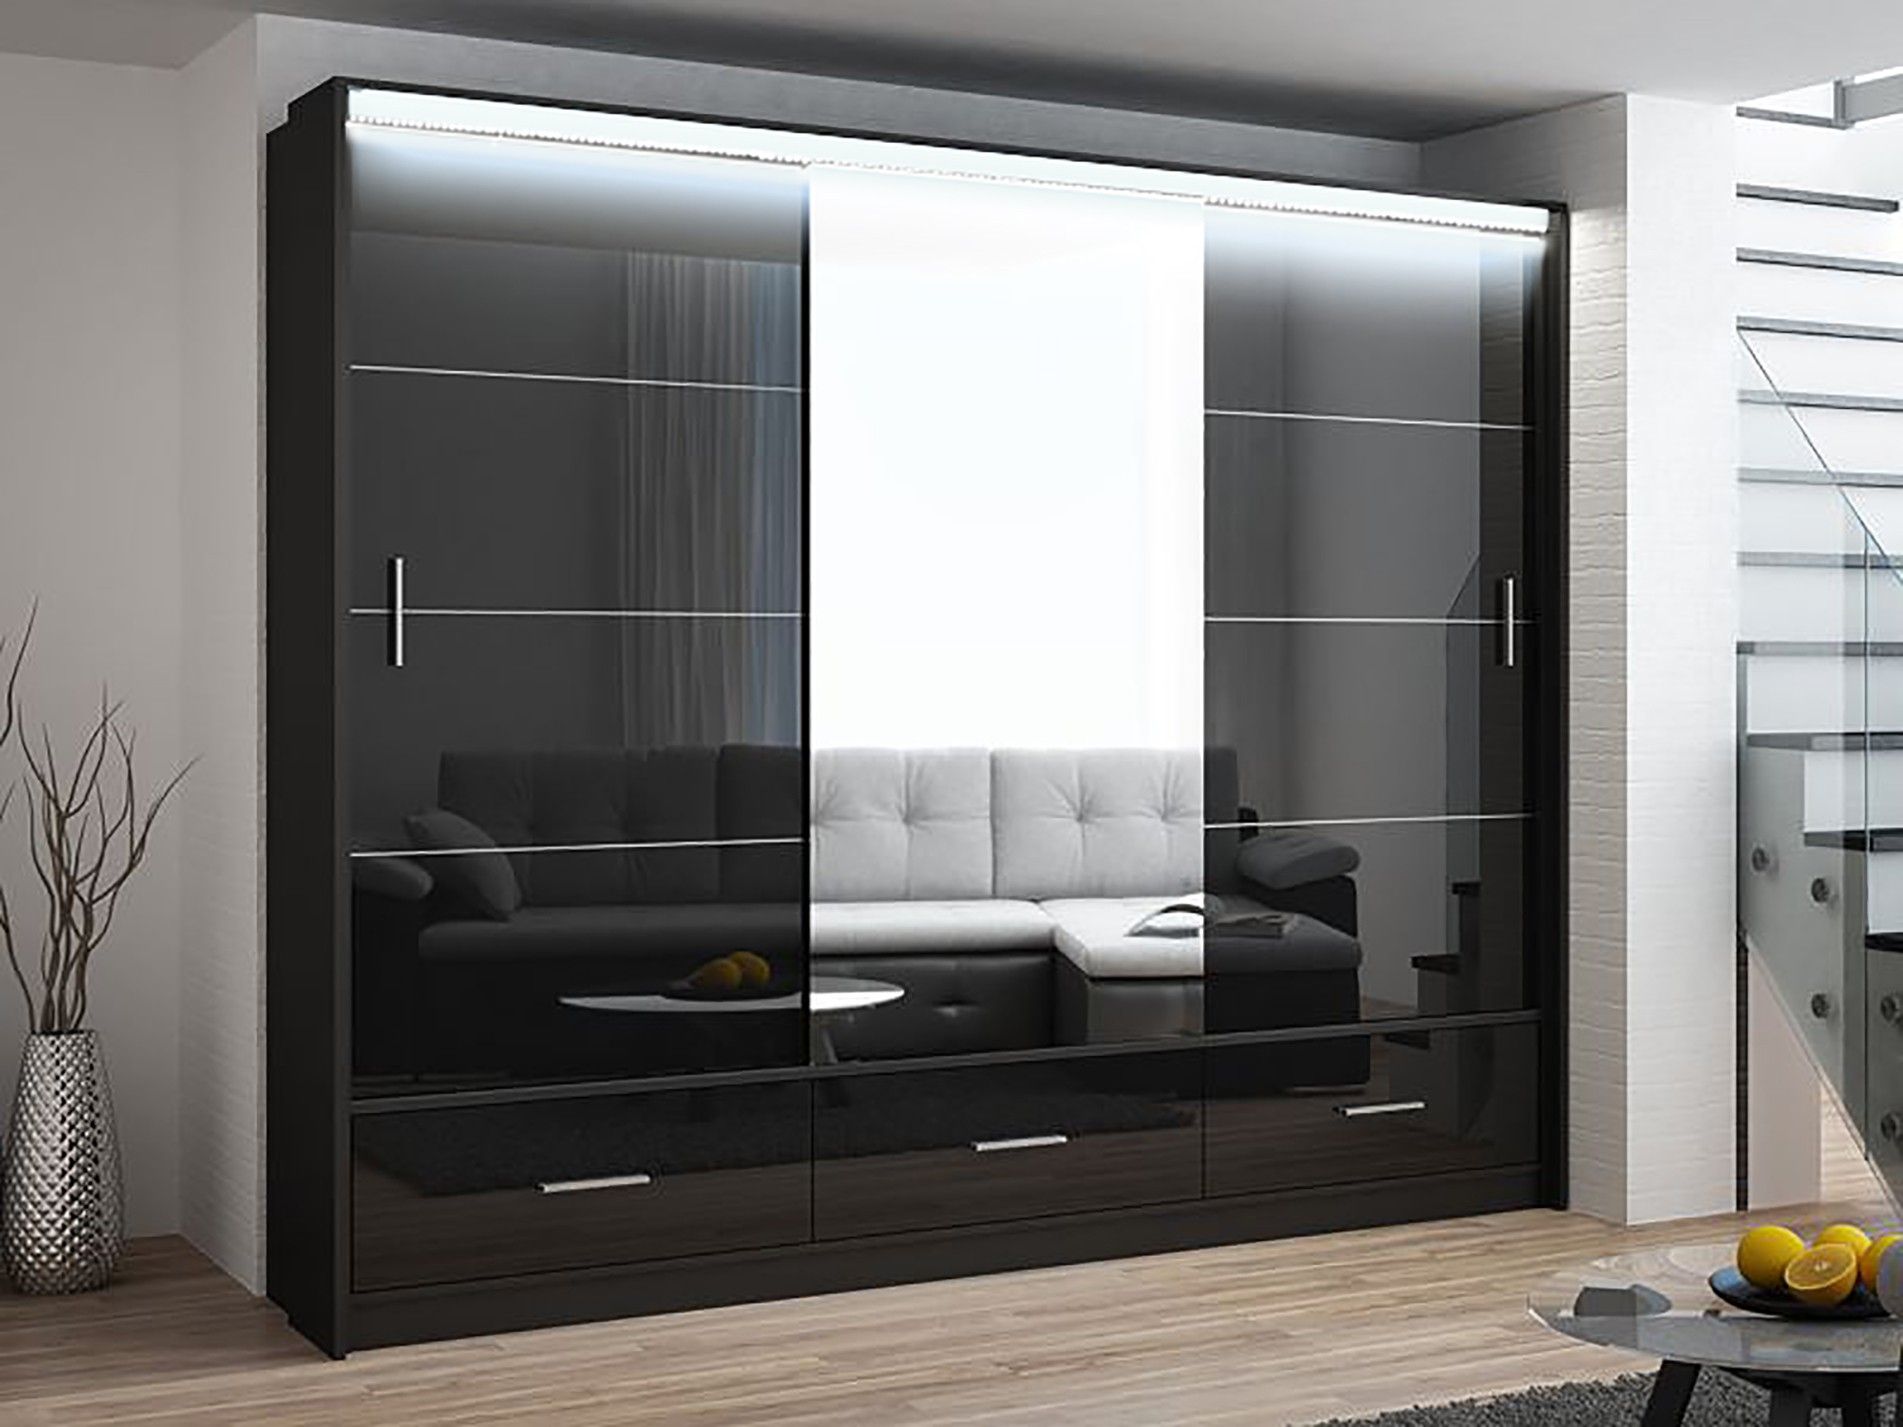 Marsylia Wardrobe, Black Gloss + Mirror 255cm ,hull Furniture Inside Black High Gloss Wardrobes (View 10 of 15)